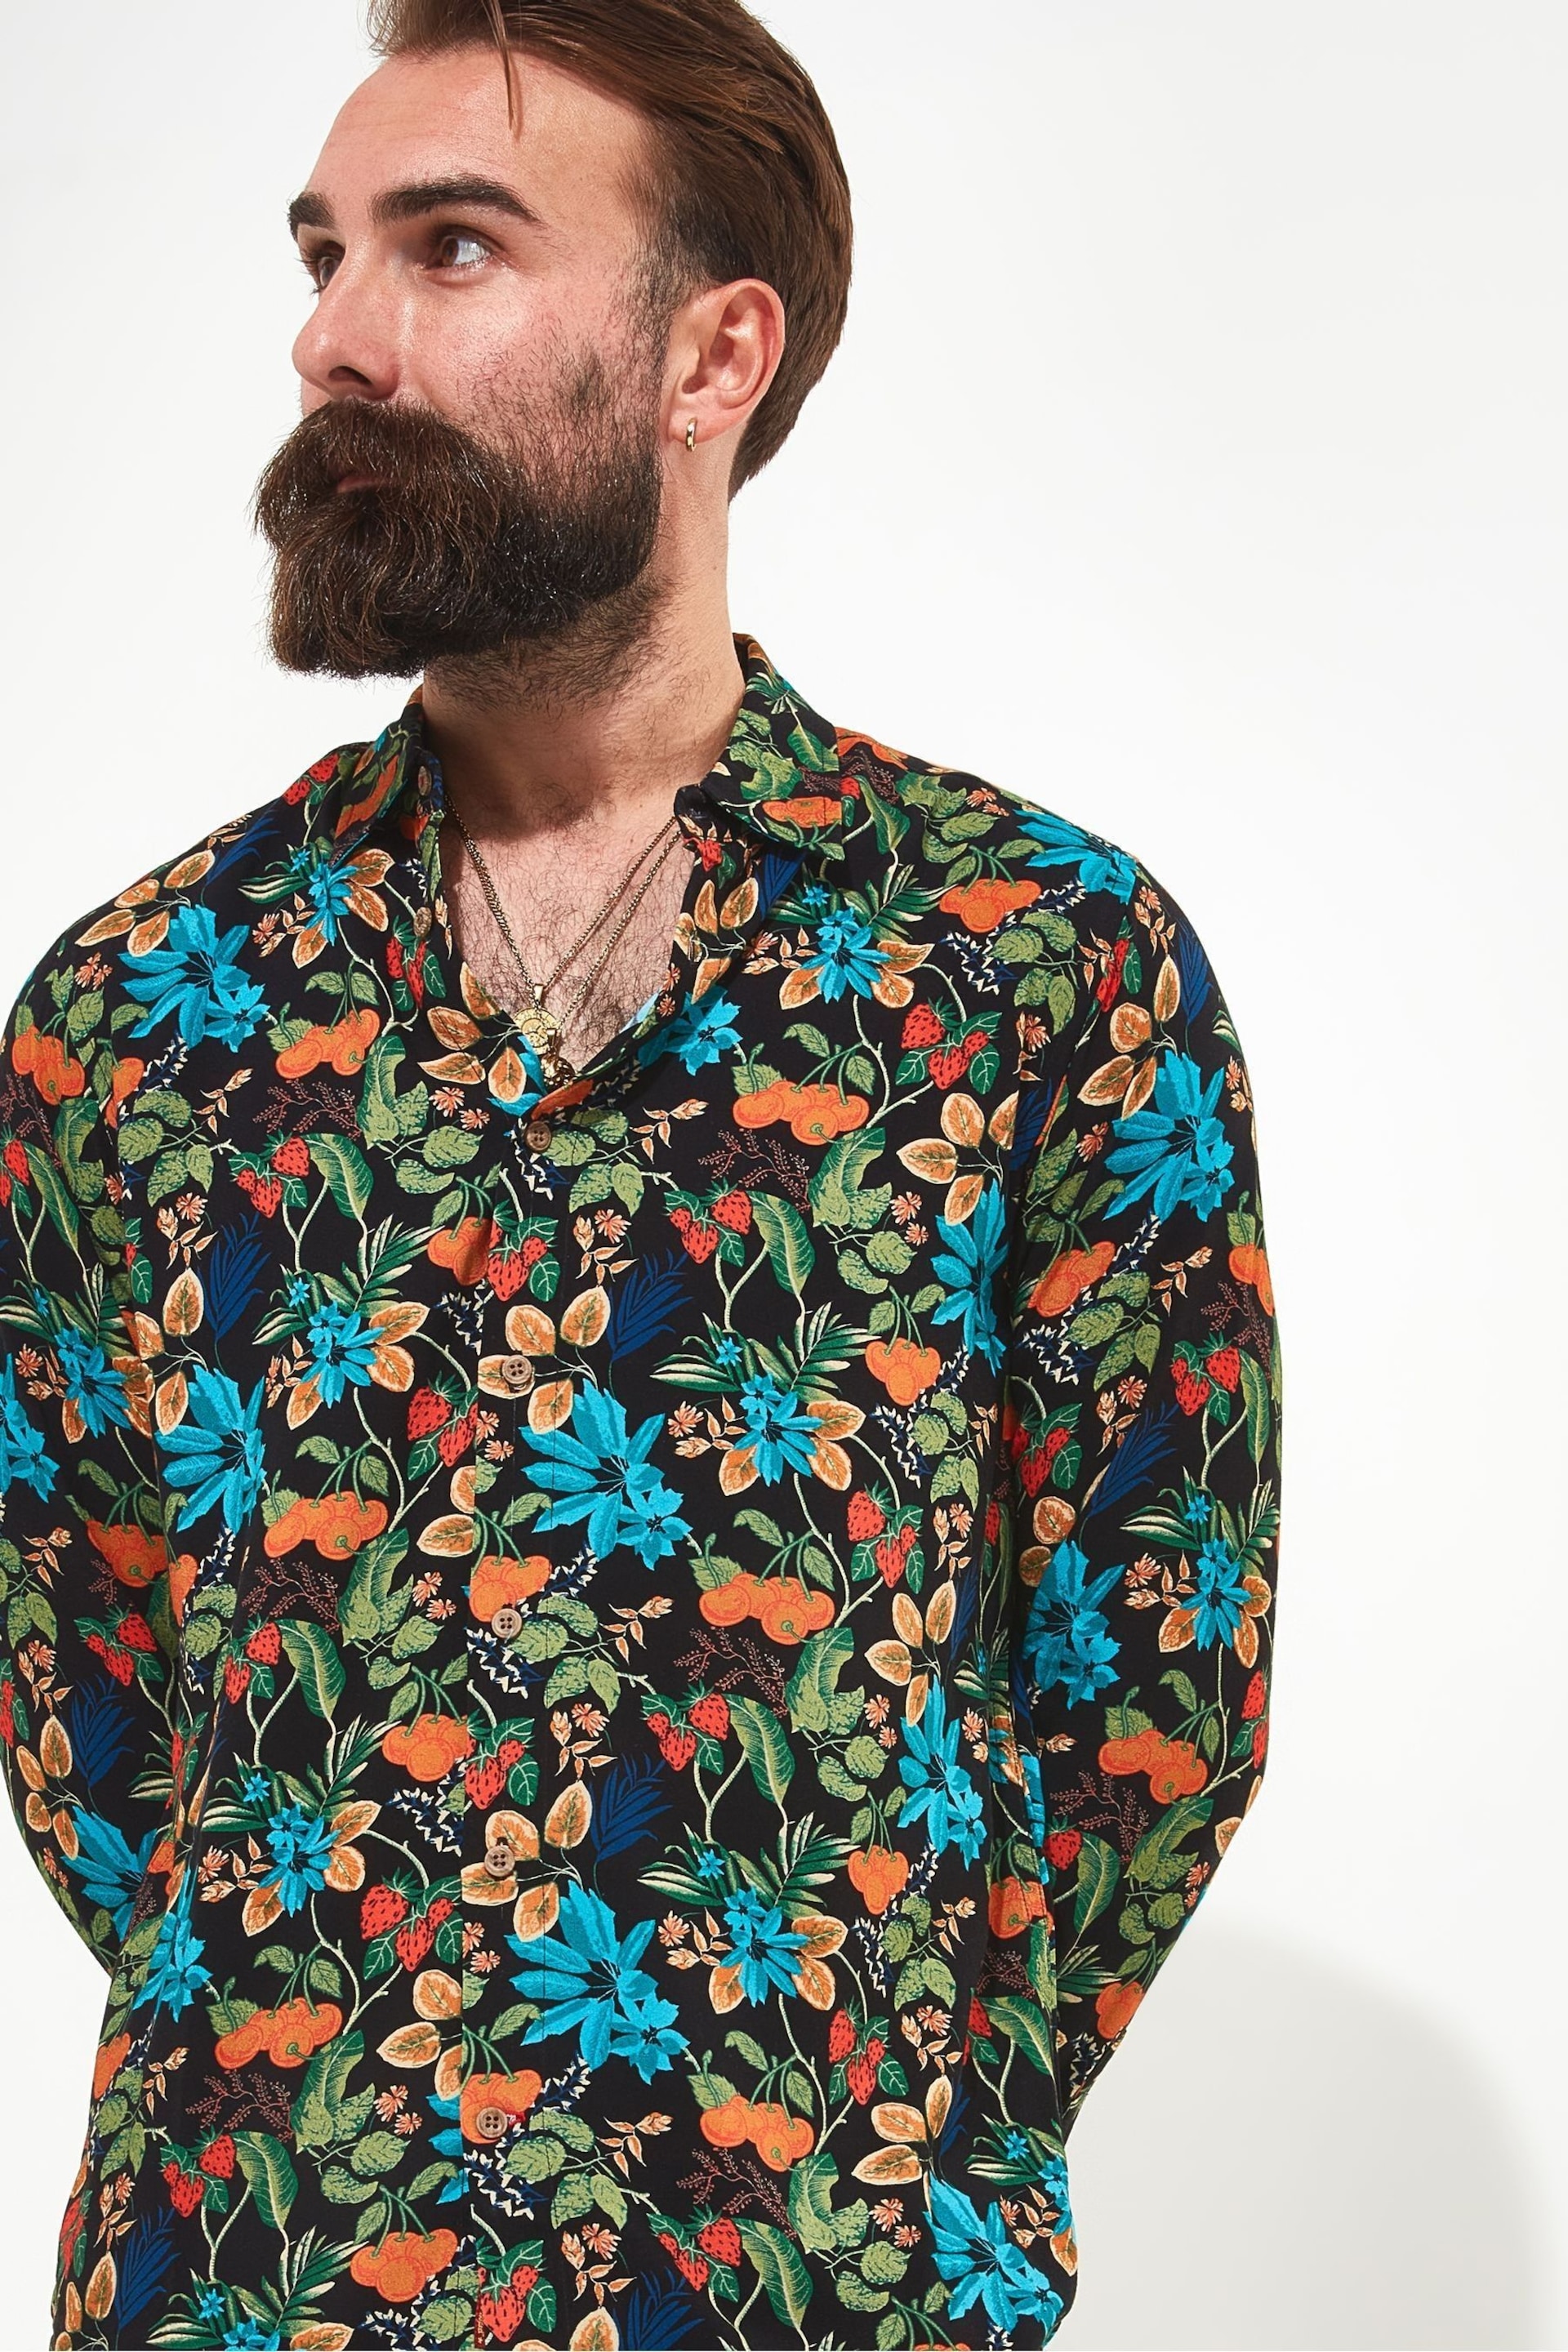 Joe Browns Black Fruit Floral Print Collared Shirt - Image 6 of 7